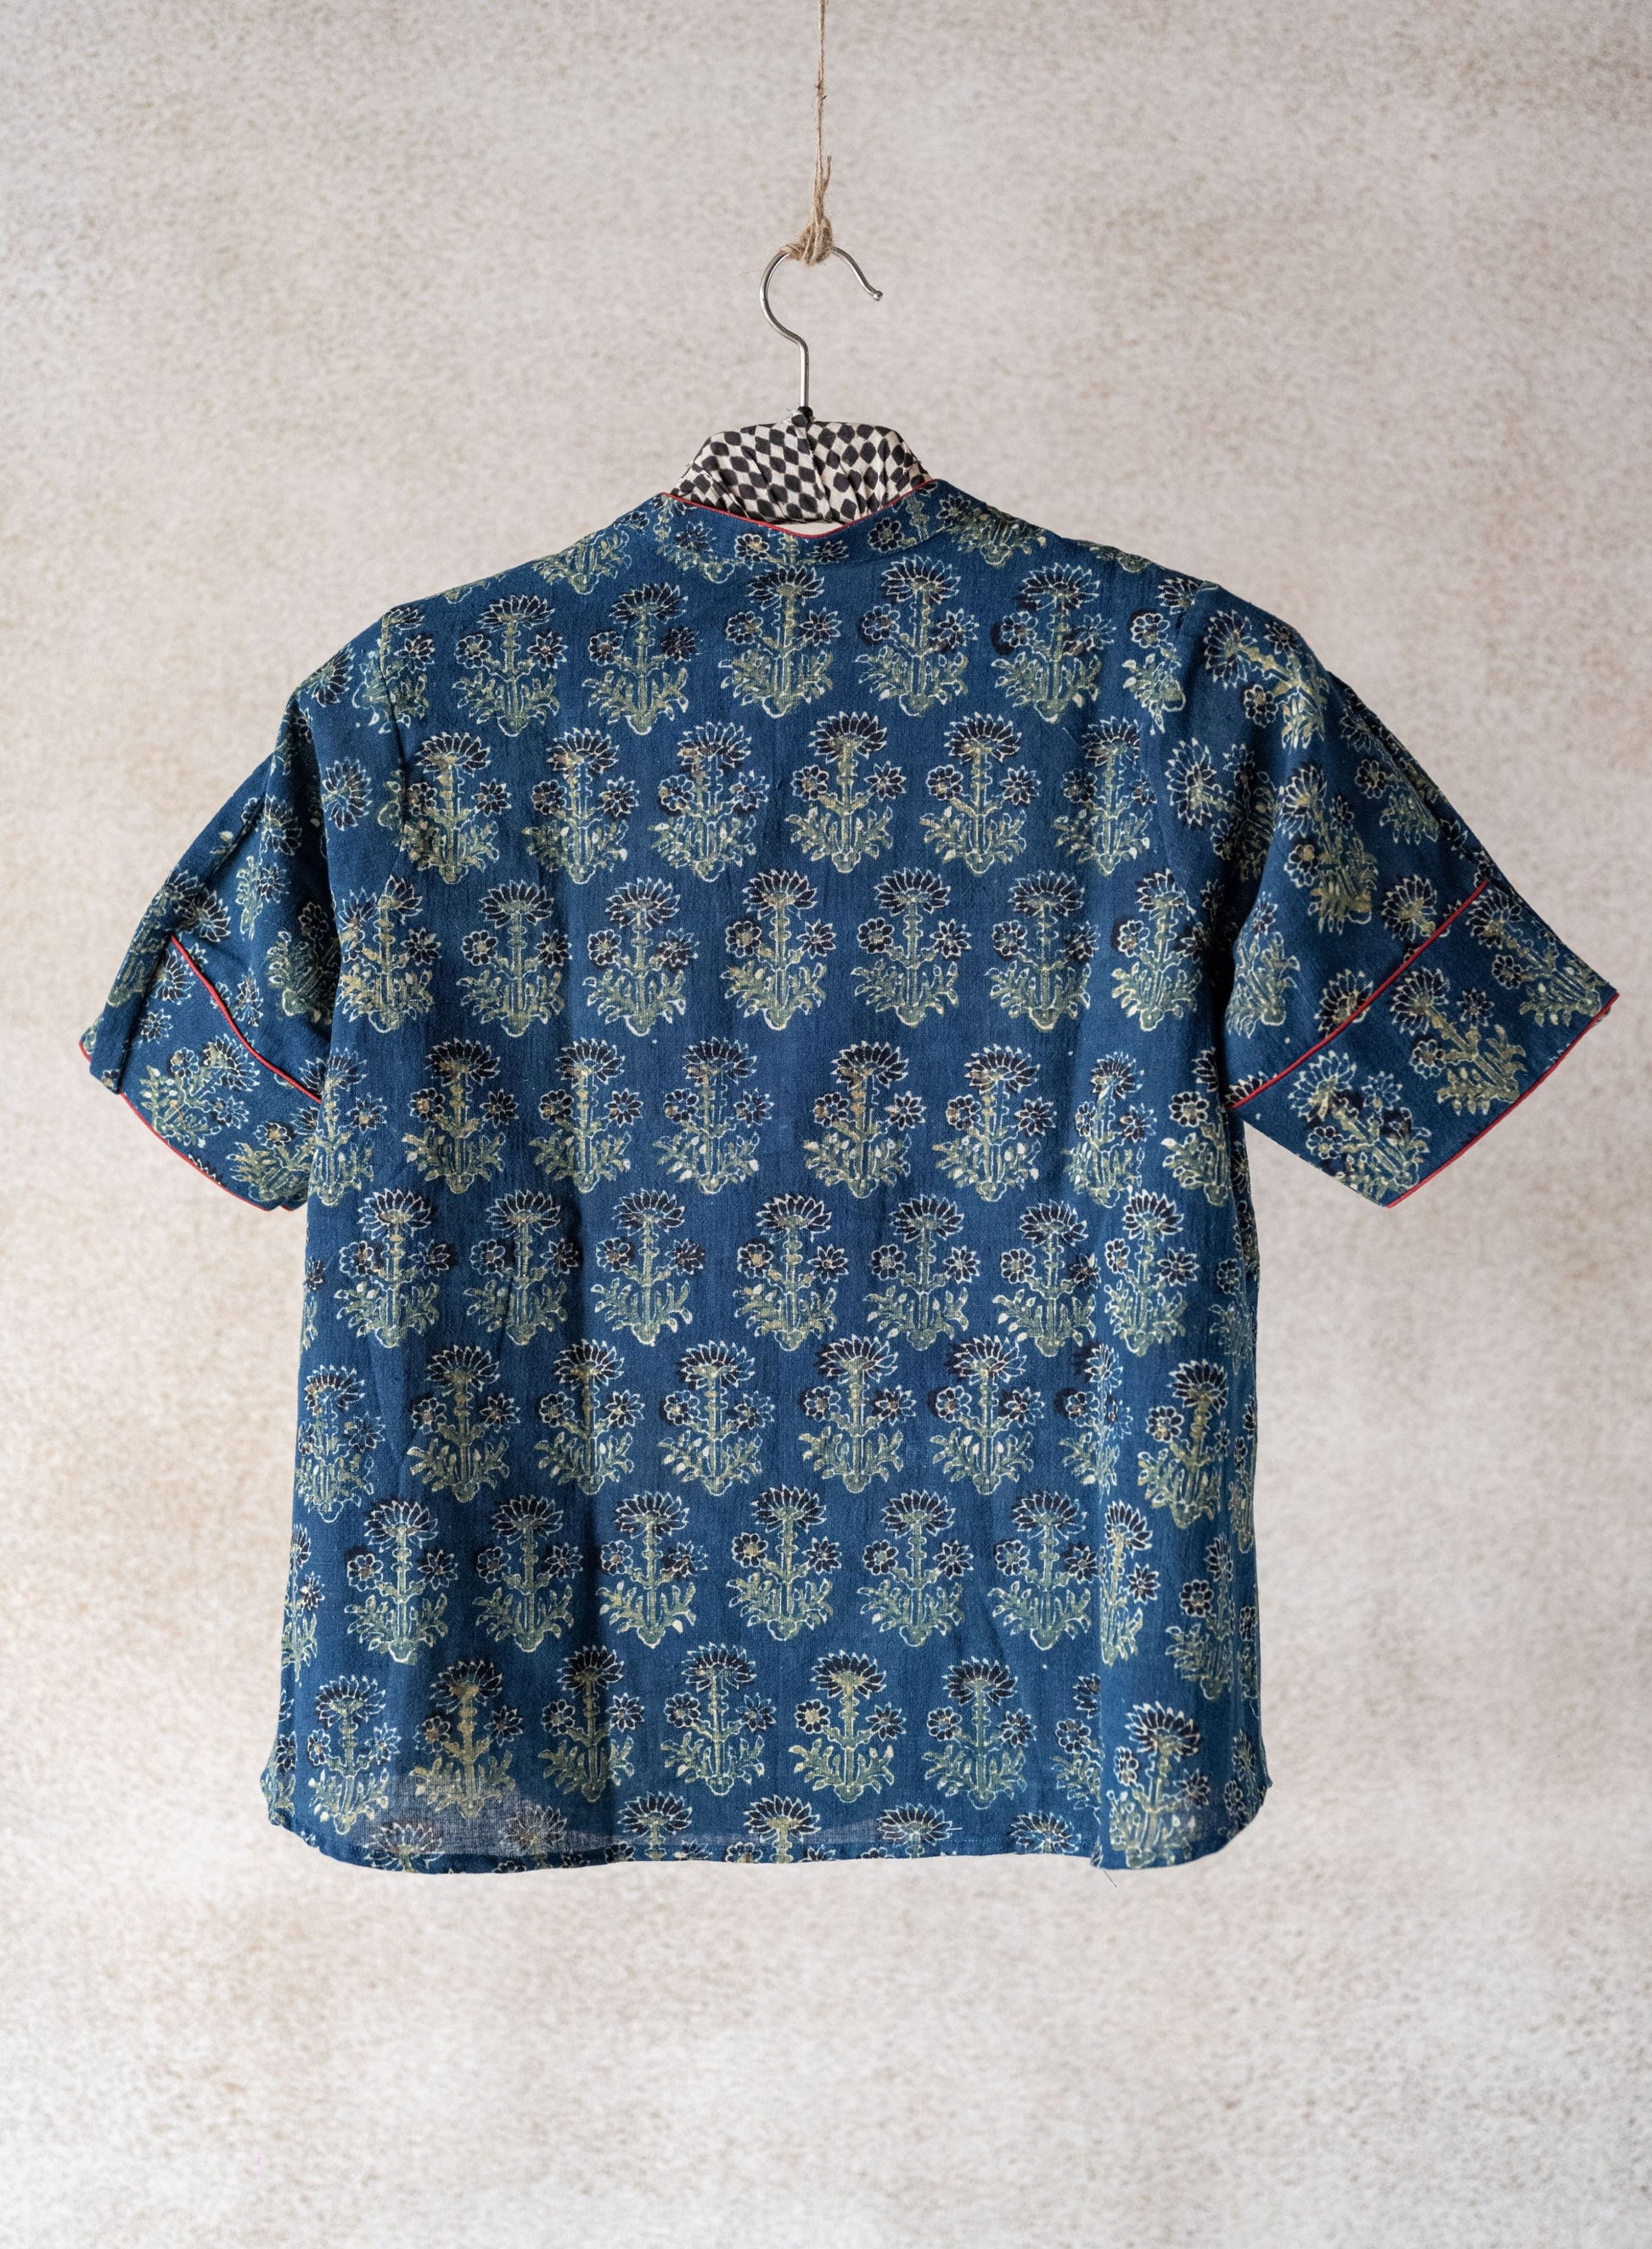 Indigo ajrakh organic cotton shirt, Natural dyed organic cotton shirt, Indigo women's shirt